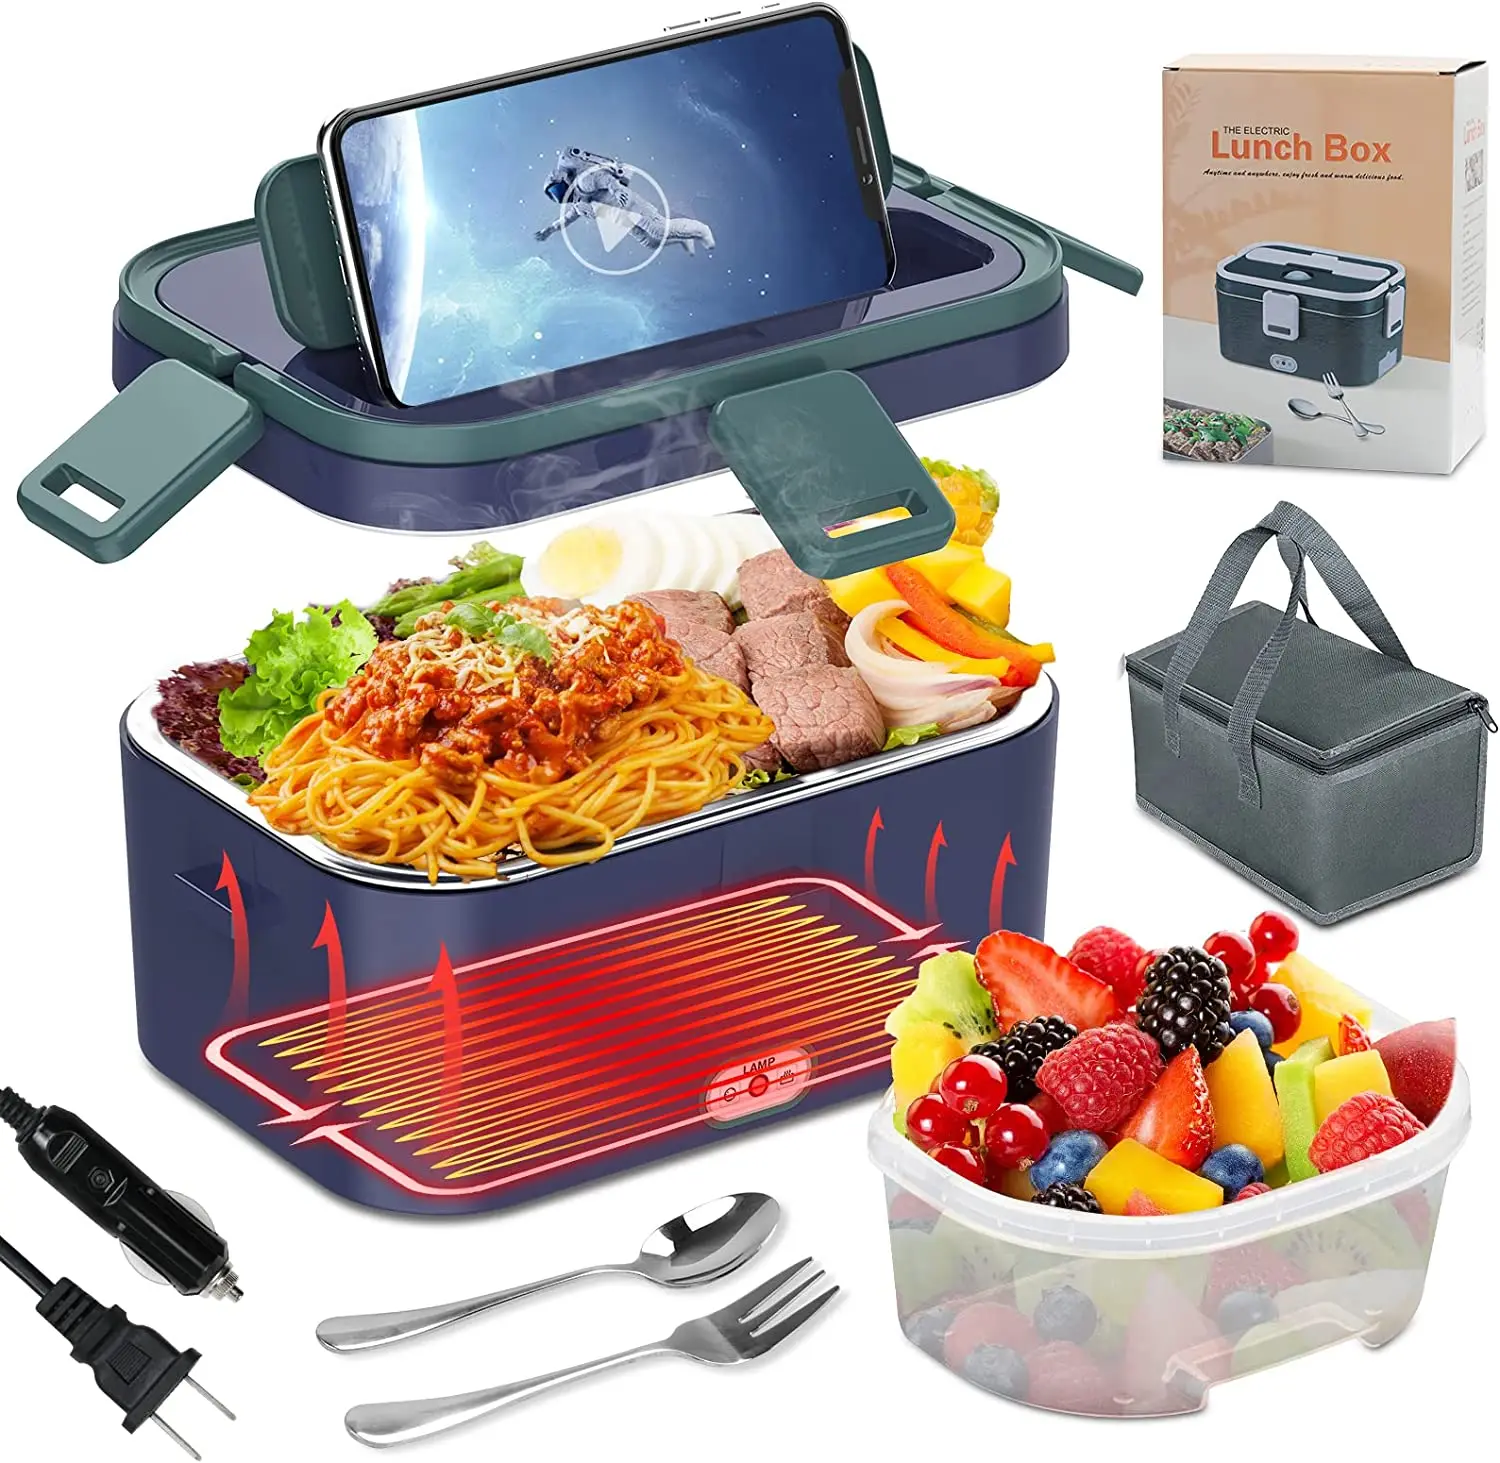 https://ae01.alicdn.com/kf/Sd7770f653ac9449e93f0d529eba7f9e91/1-8L-Electric-Lunch-Box-60W-Food-Heated-Portable-Food-Warmer-Heater-for-Car-Truck-Home.jpg